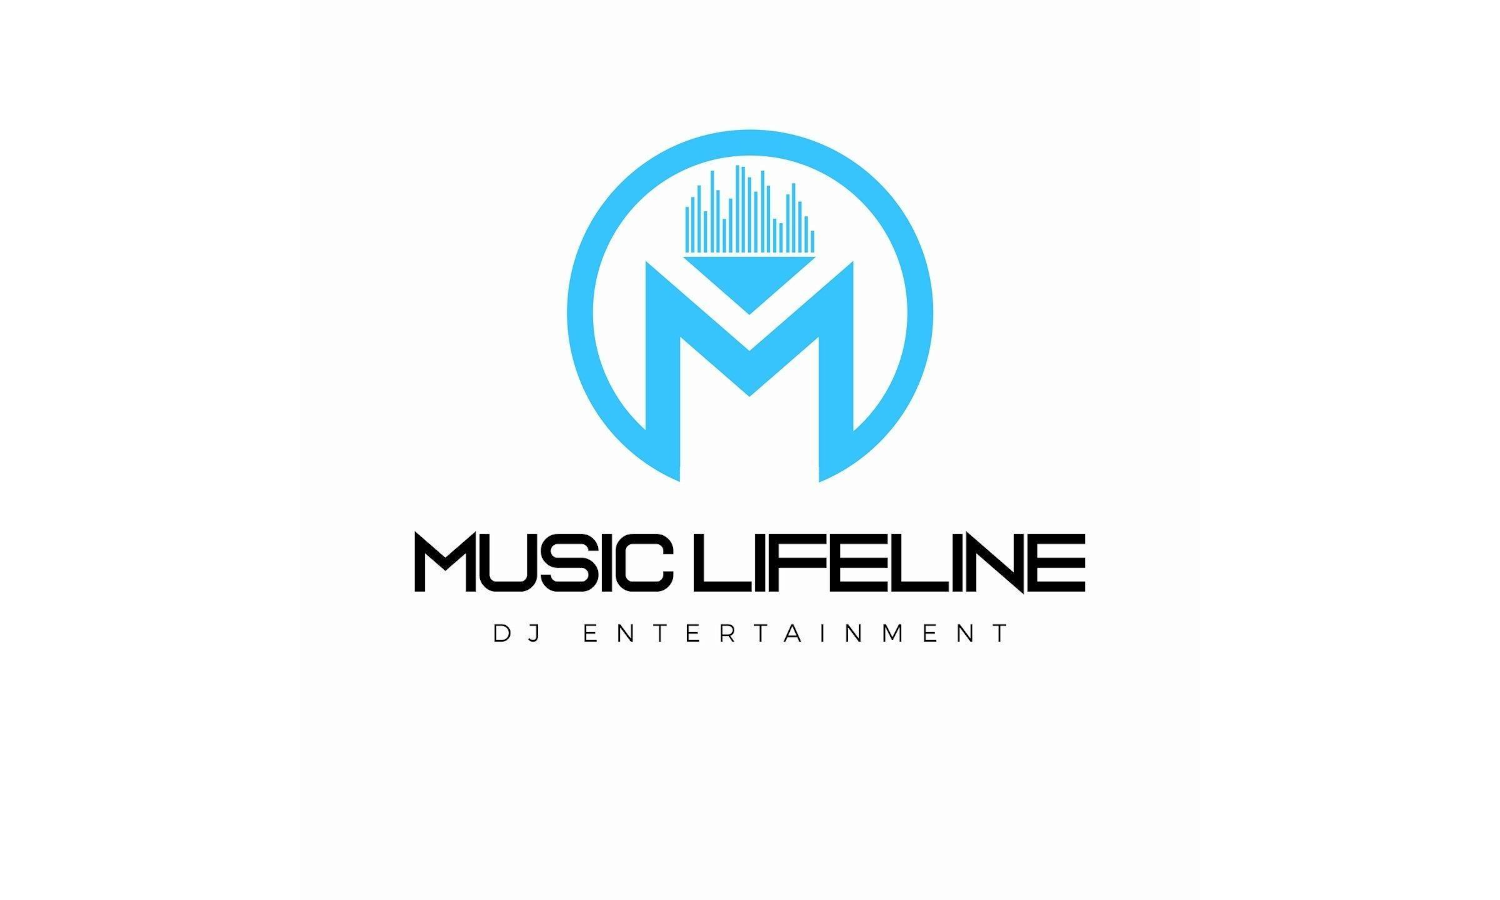 Music Lifeline